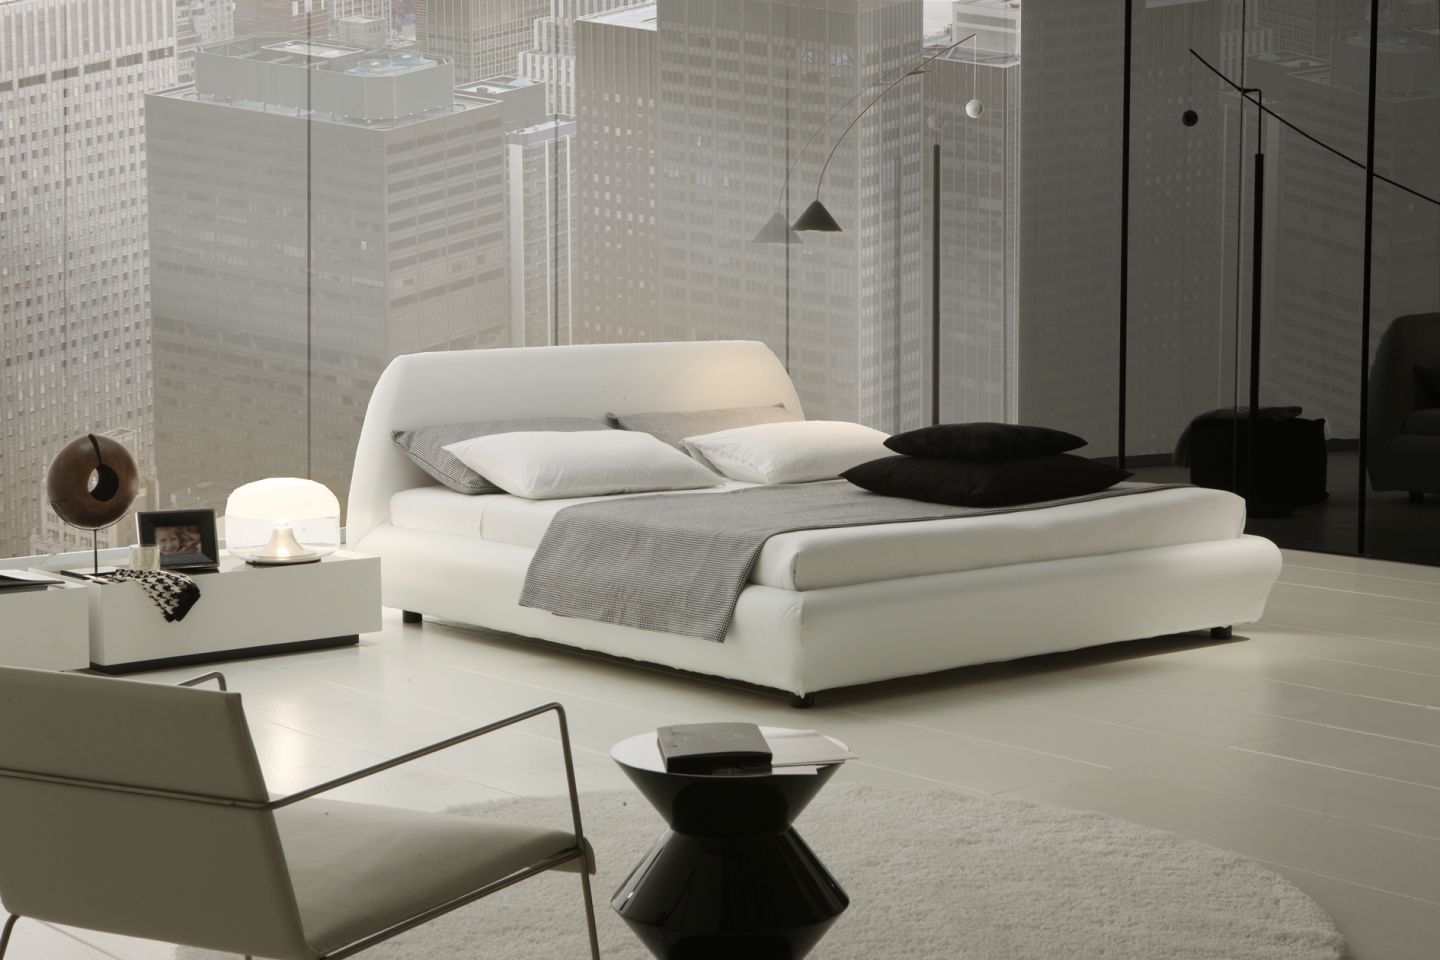 Ravishing-White-Modern-Bedroom-Decoration-Ideas-Superb-Modern-Room-Decoration-Uses-White-Bedroom-Furniture-Of-Pllatform-Bed-And-Small-Desk